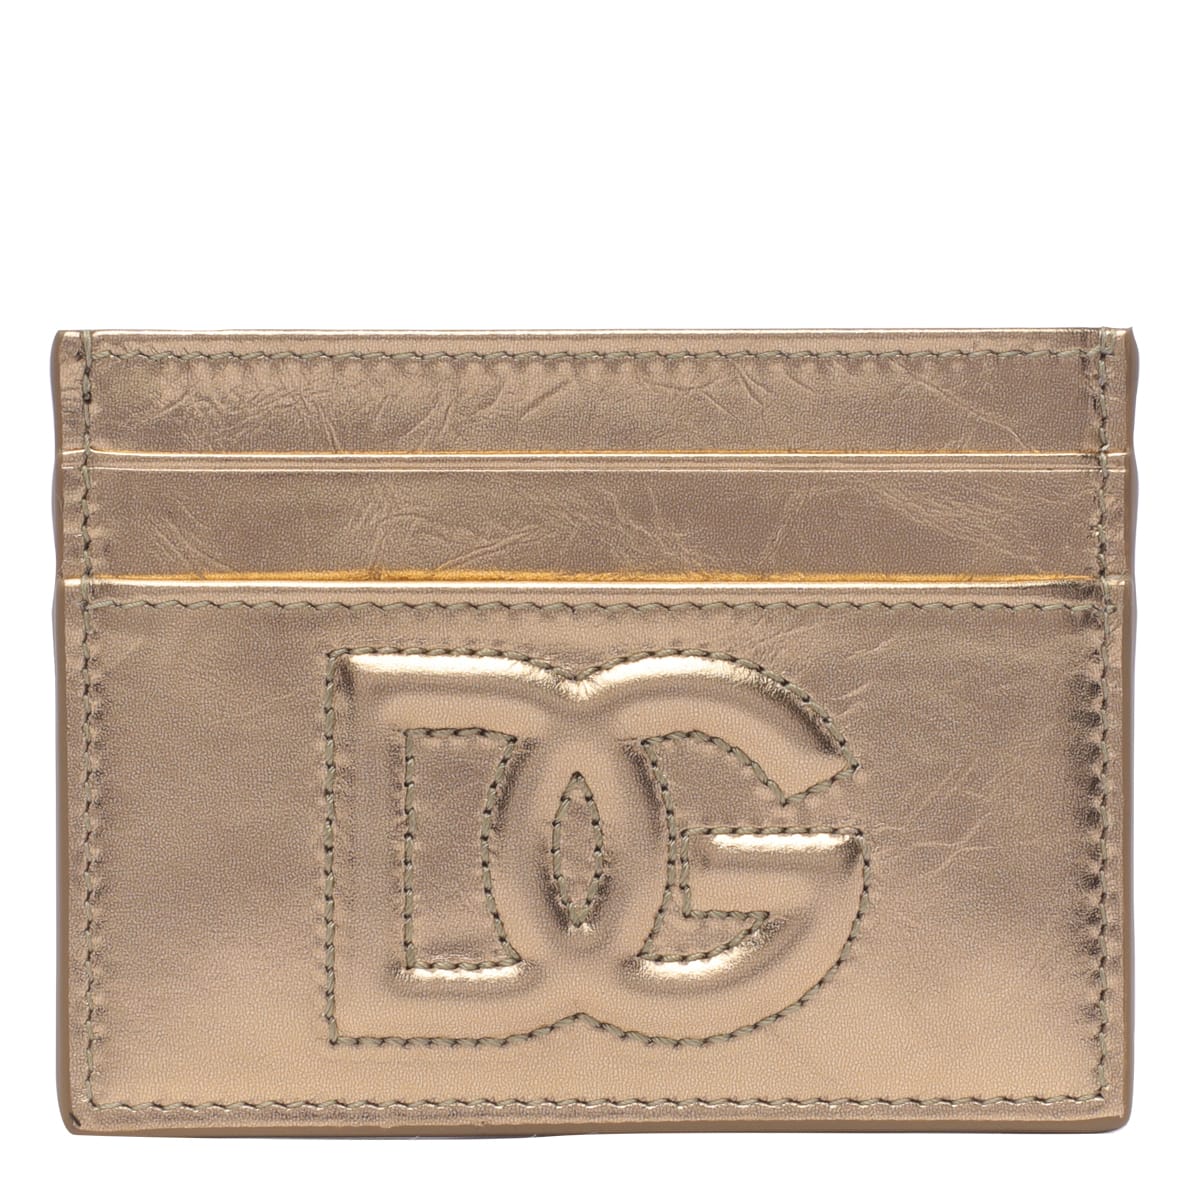 Dolce & Gabbana Dg Logo Cards Holder In Black